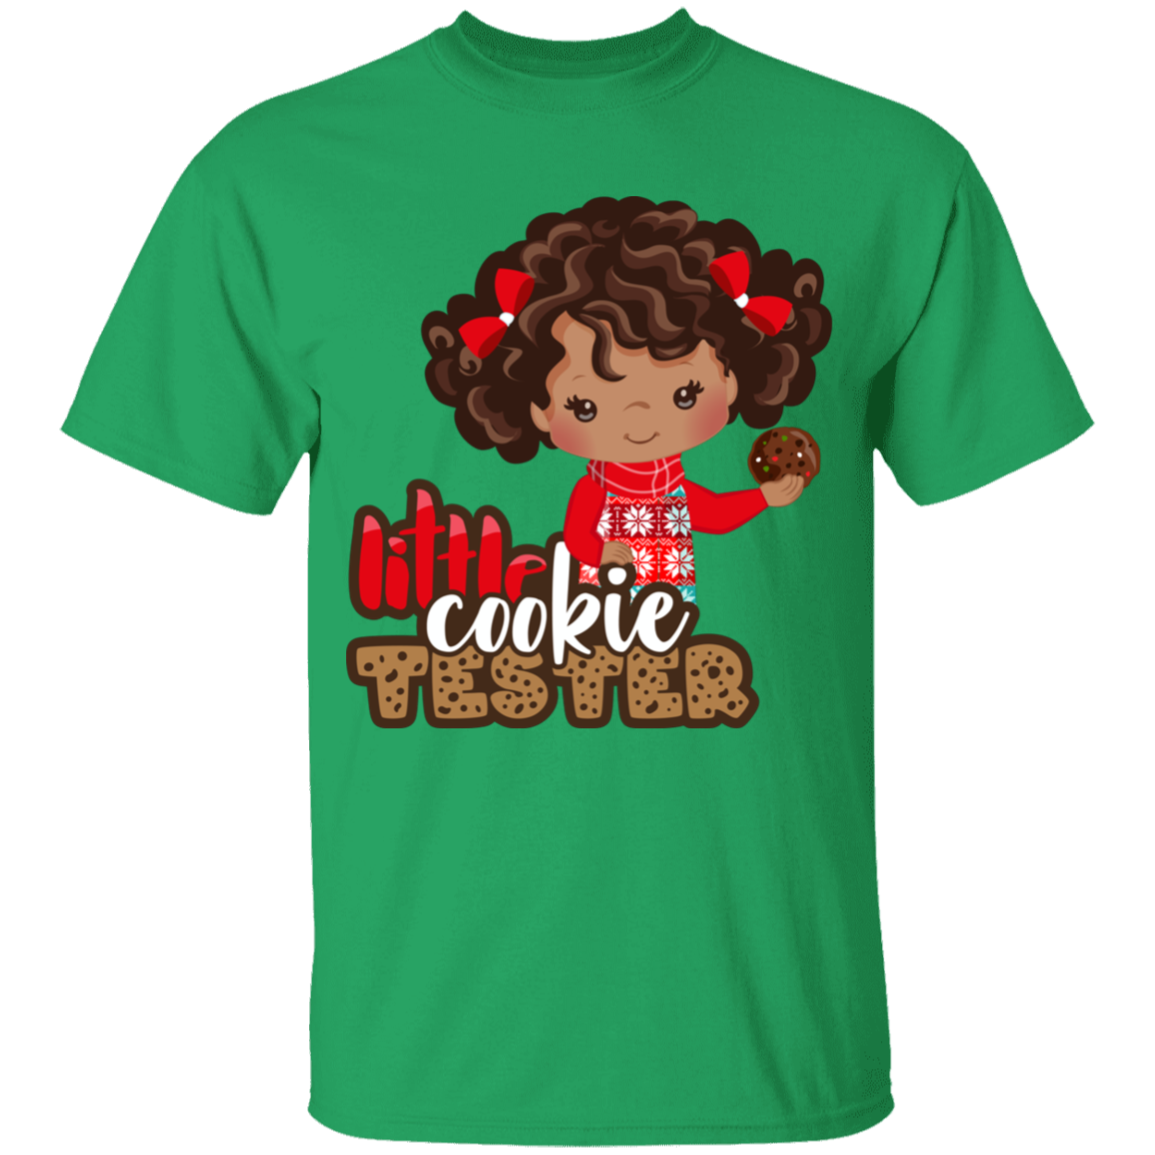 Little Cookie Tester Girl Cotton T-Shirt